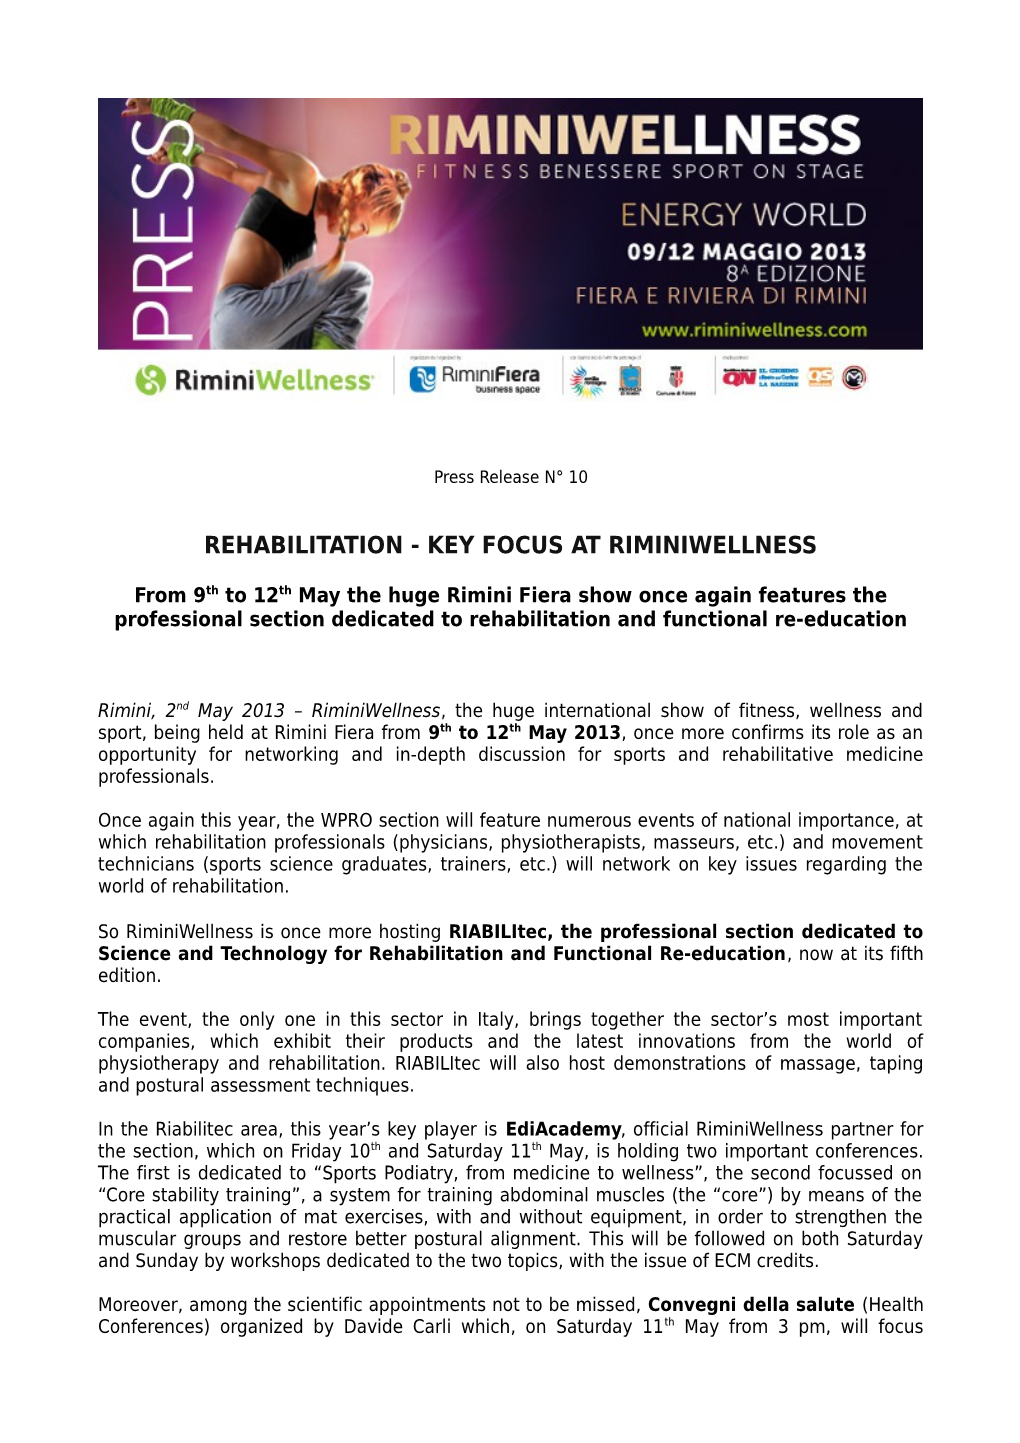 Rehabilitation - Key Focus at Riminiwellness